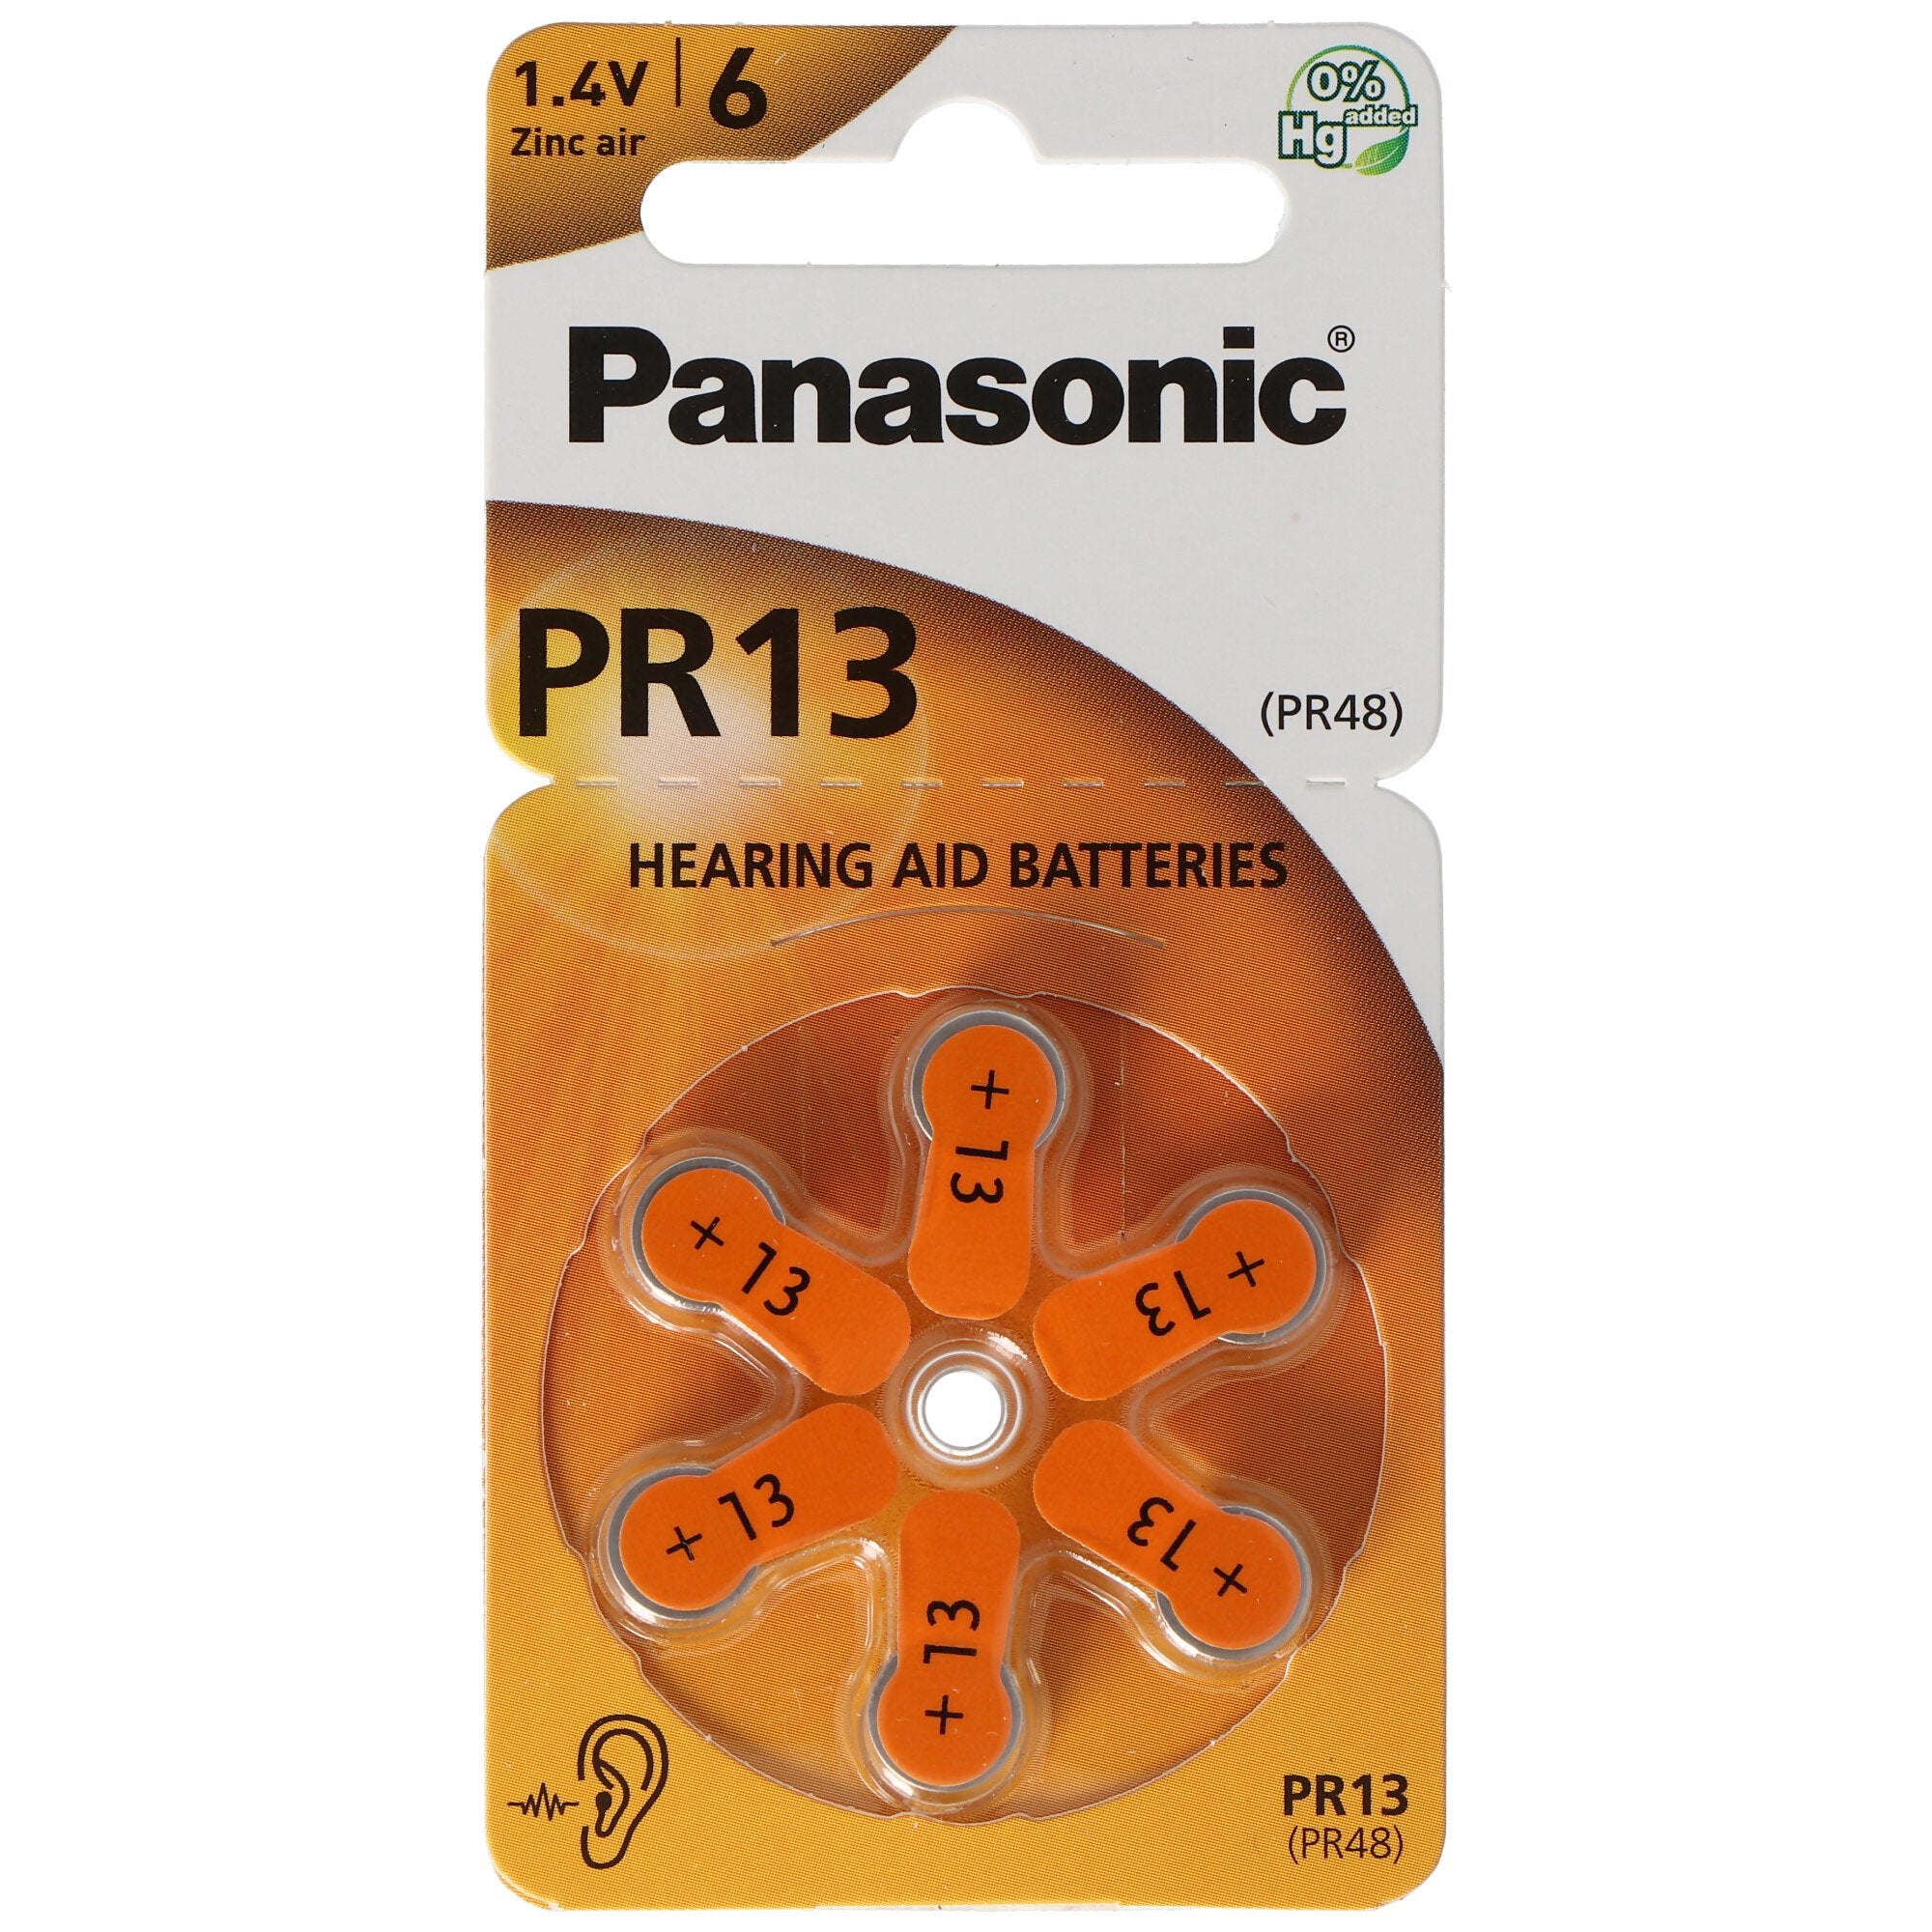 Panasonic PR13 hearing aid batteries PR-13 / 6LB, hearing aid cells 13 Zinc Air 6er wheel